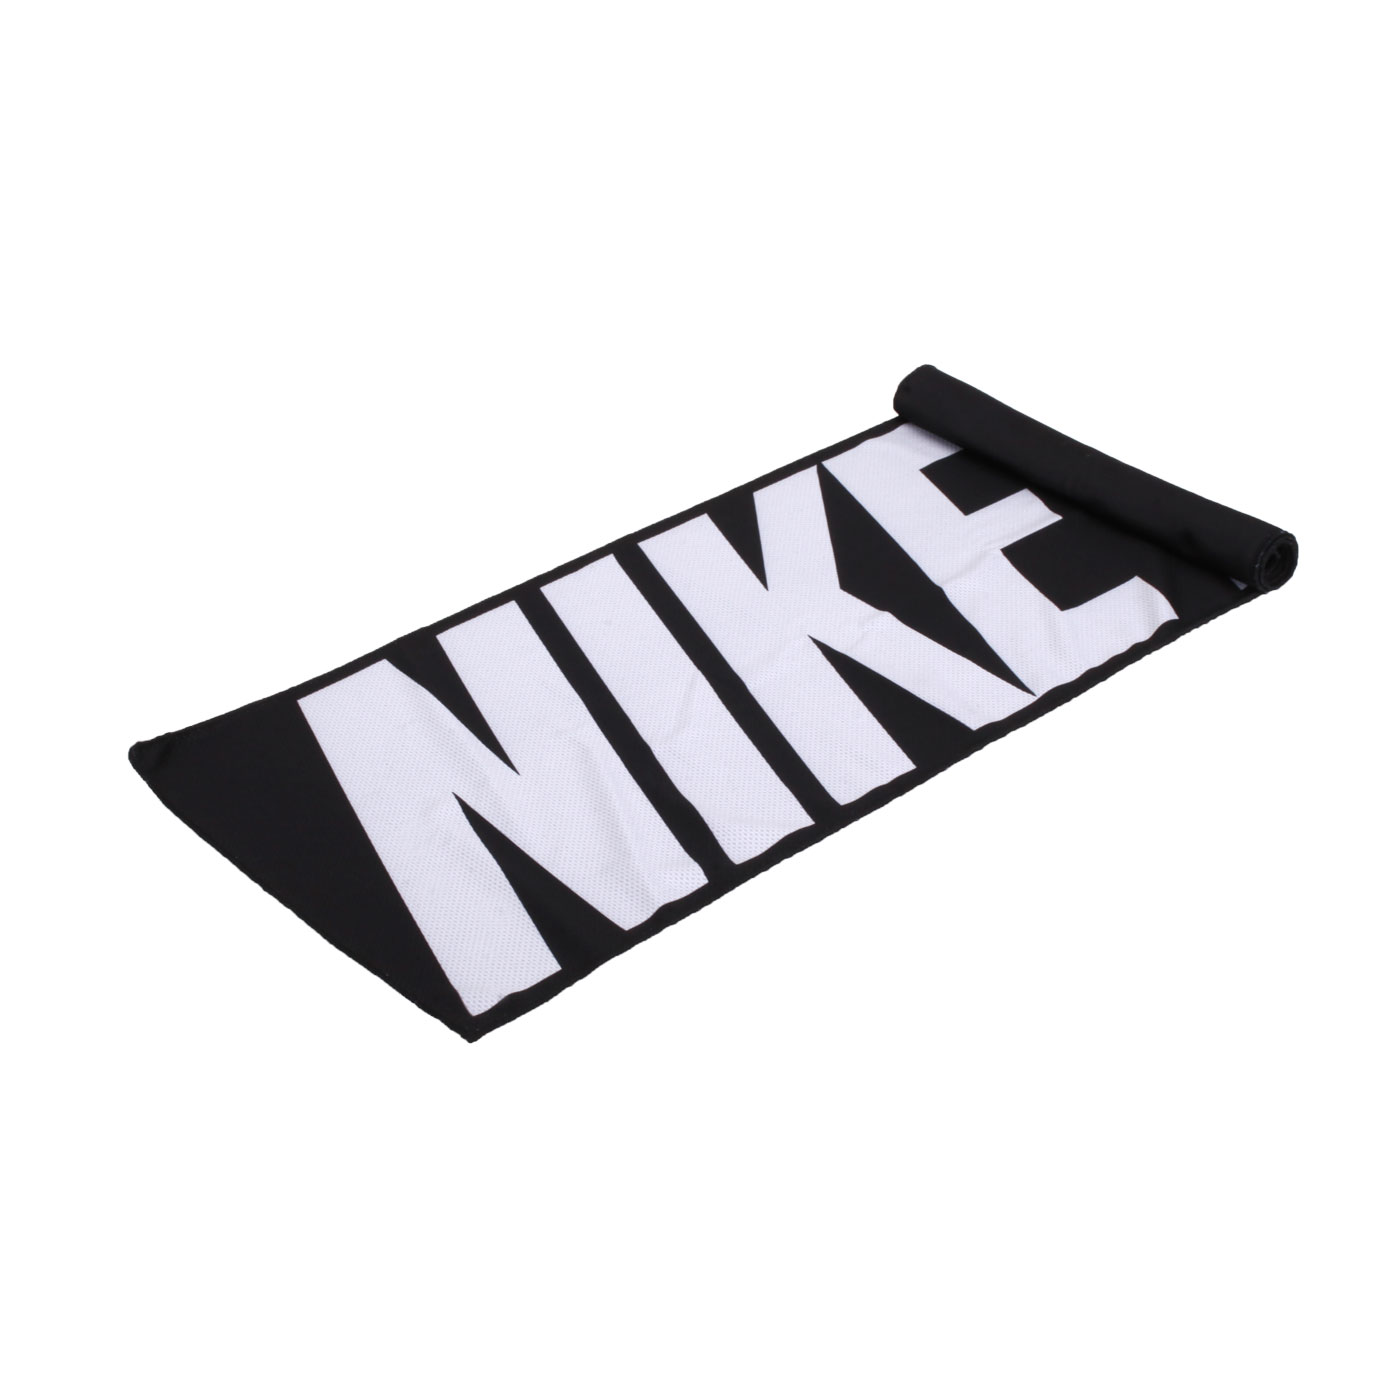 NIKE COOLING TOWEL MUFFLER 毛巾(100x25cm)  N1007596010NS - 黑白